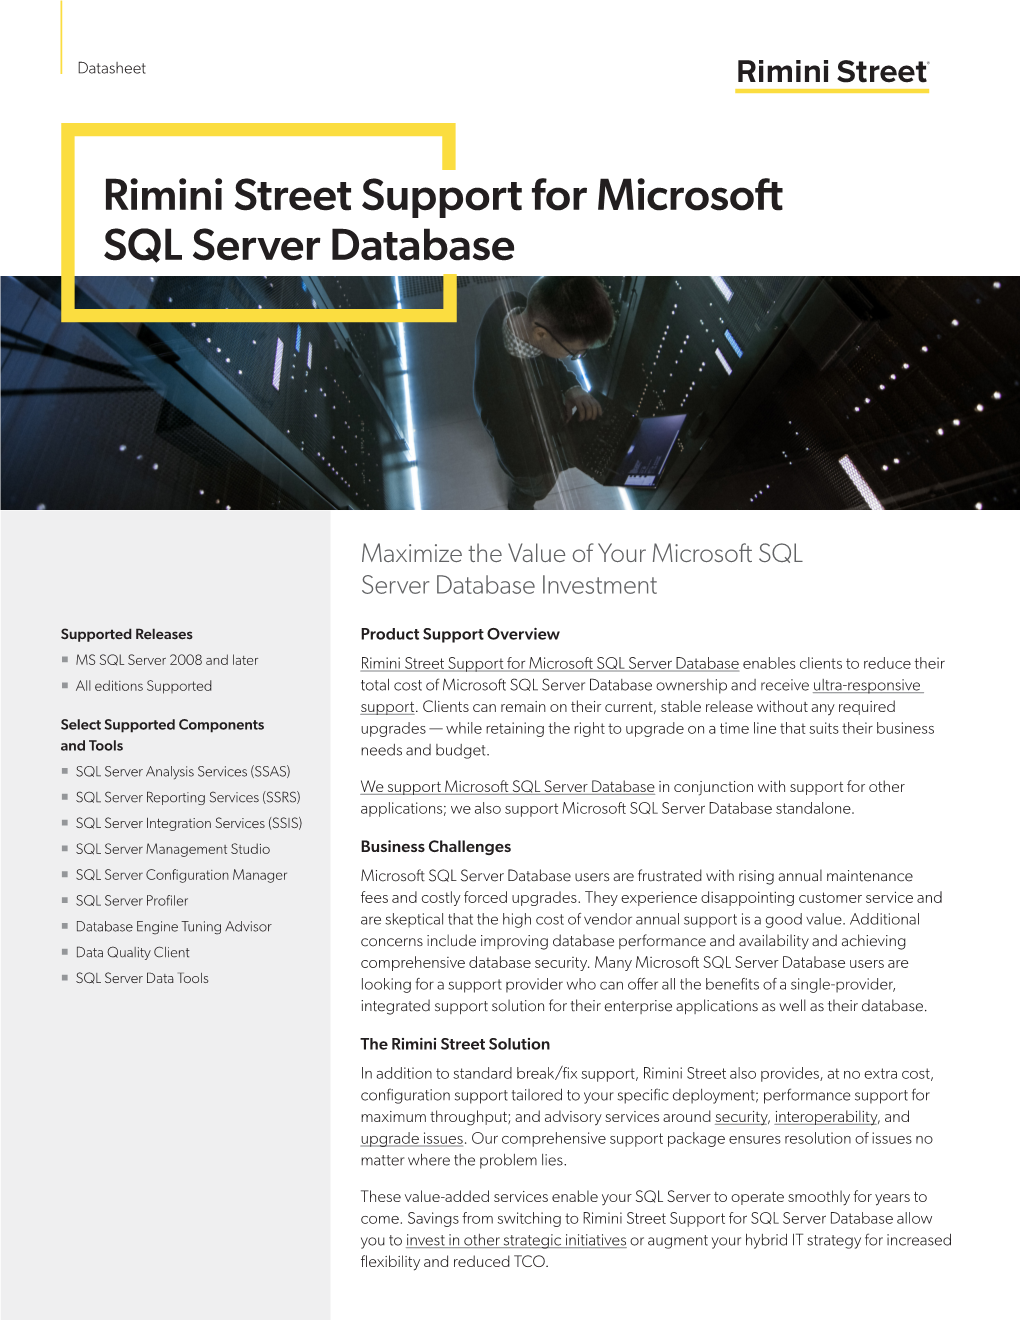 Third-Party Support for Microsoft SQL Server Database | Rimini Street